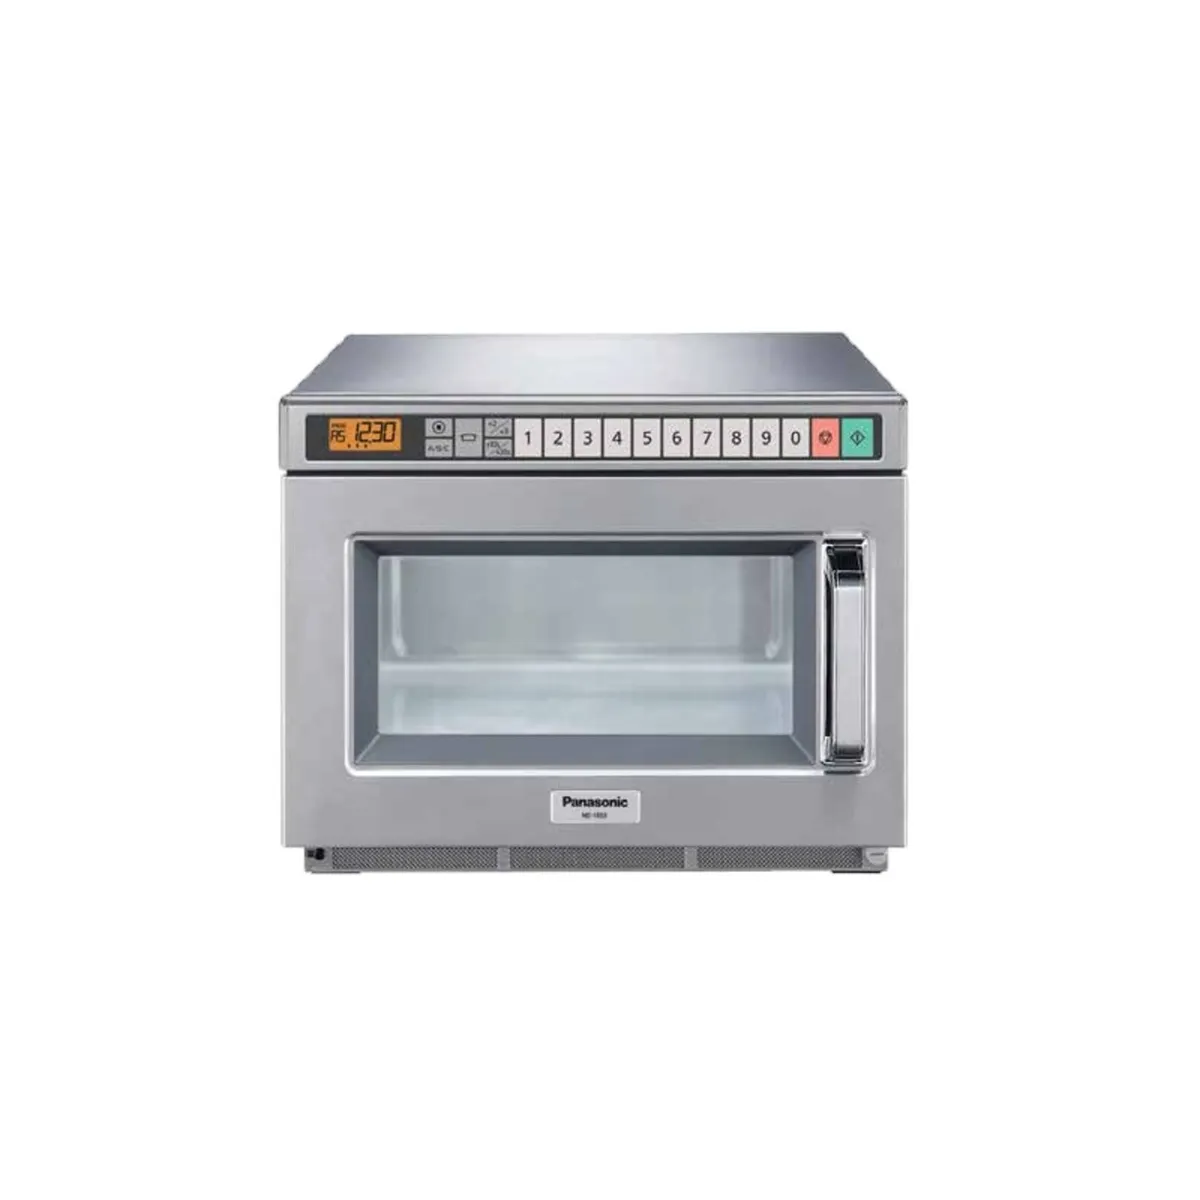 Panasonic 1800W Microwave Oven